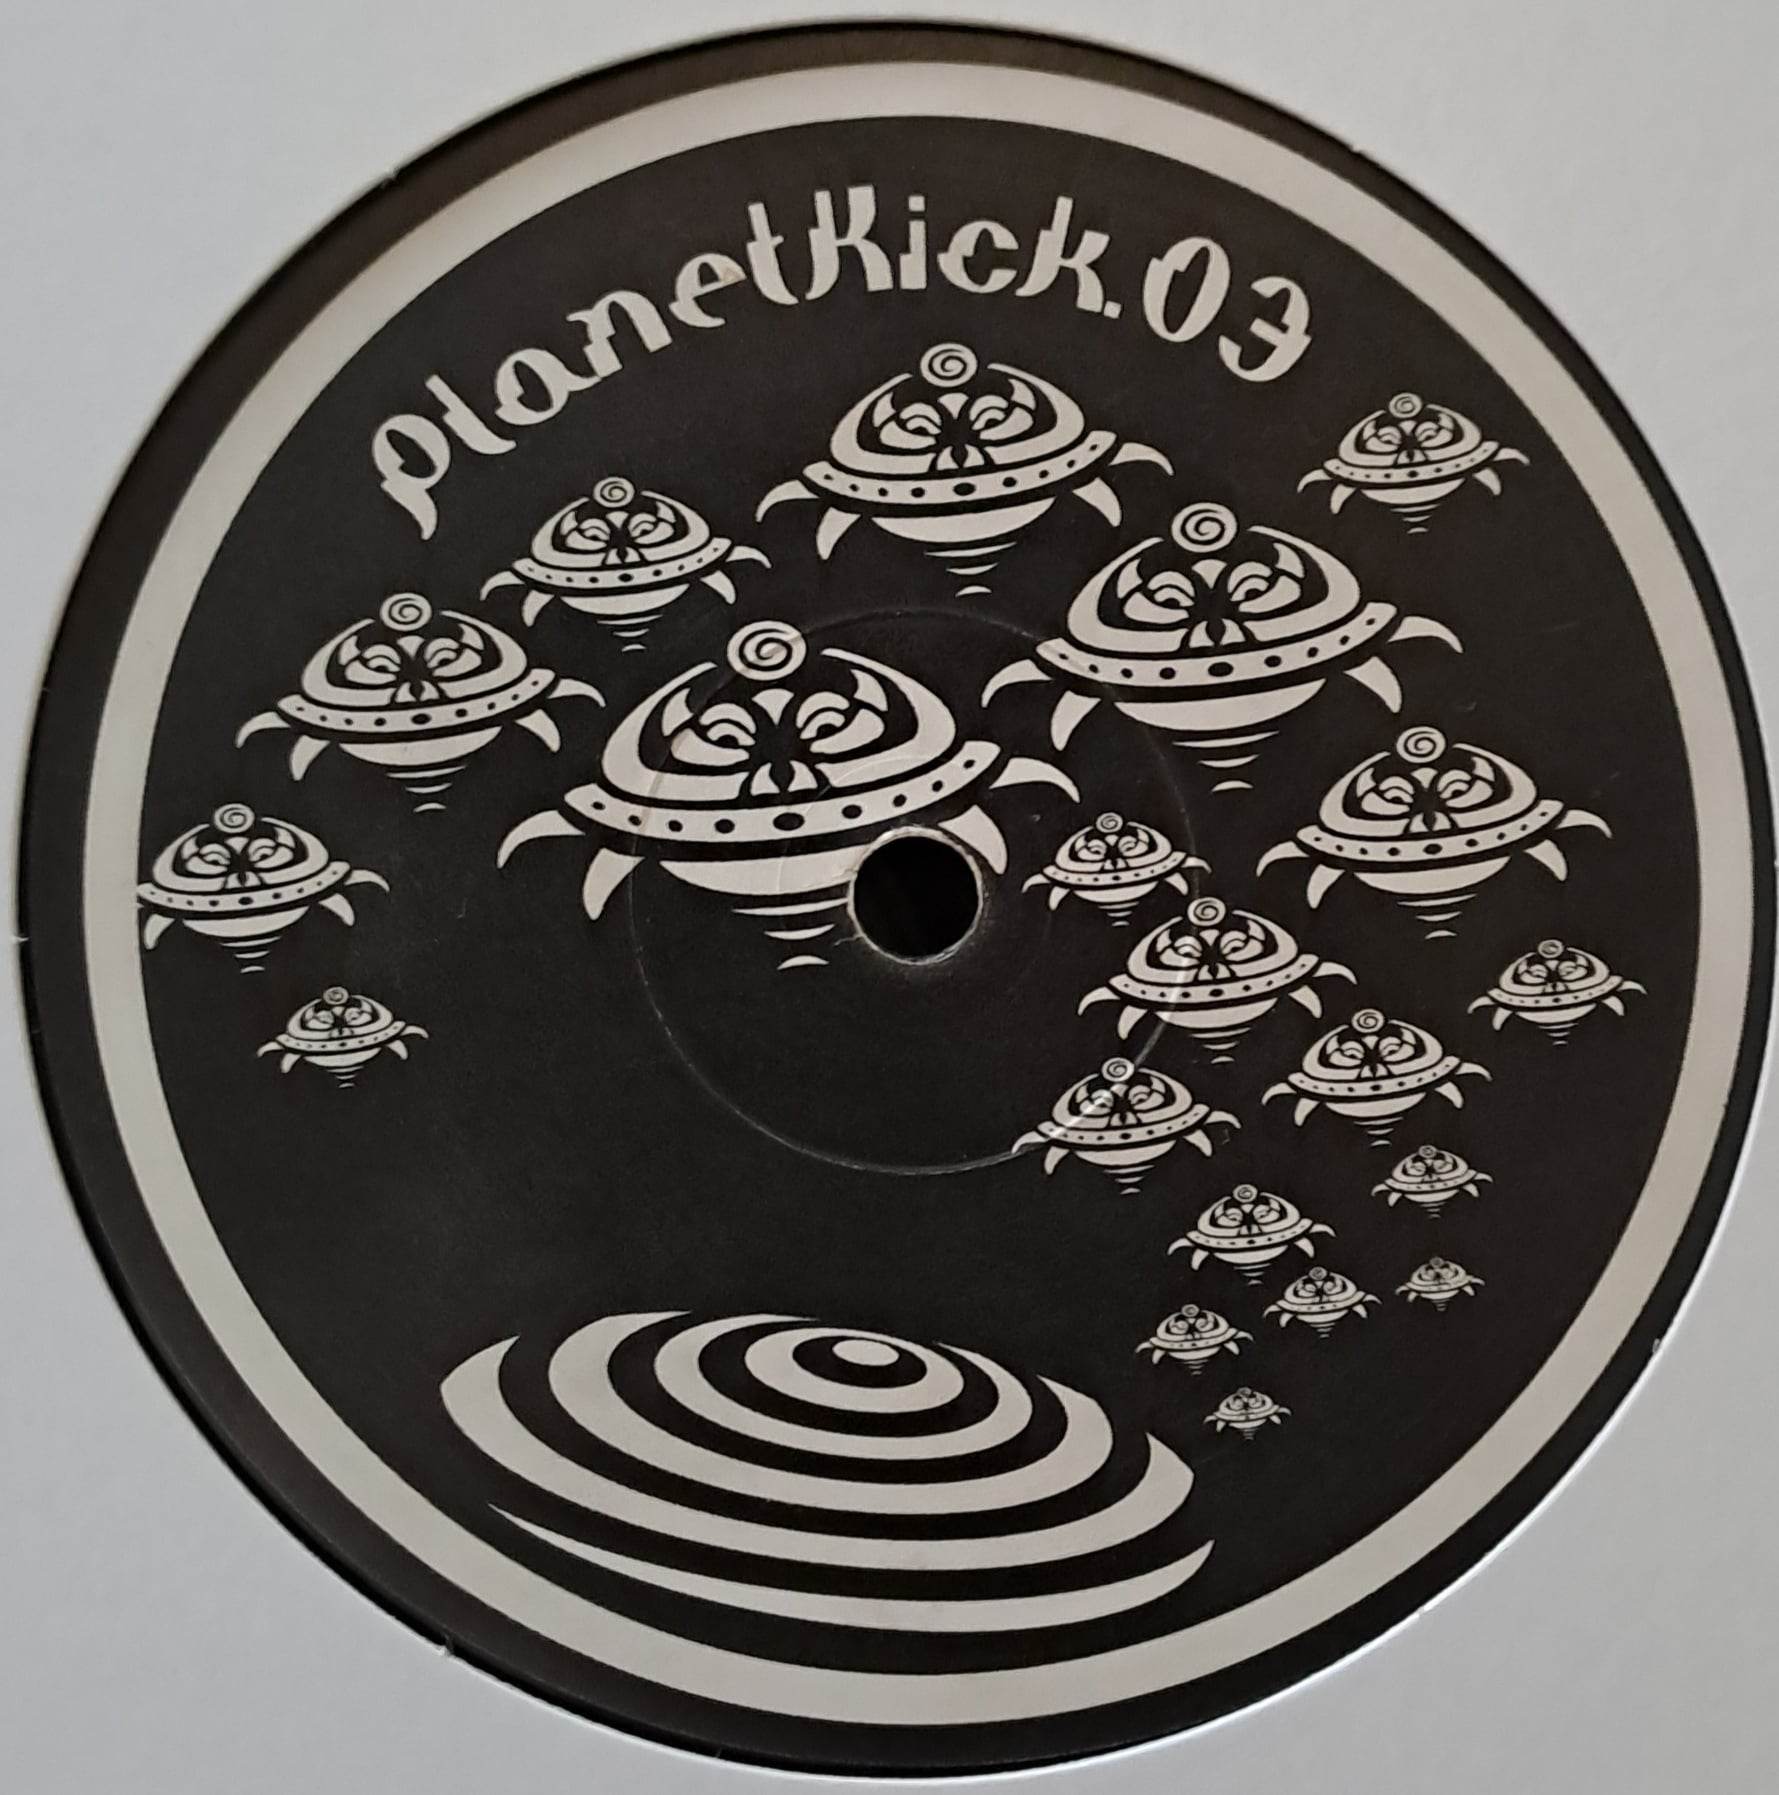 Planet Kick 03 - vinyle freetekno